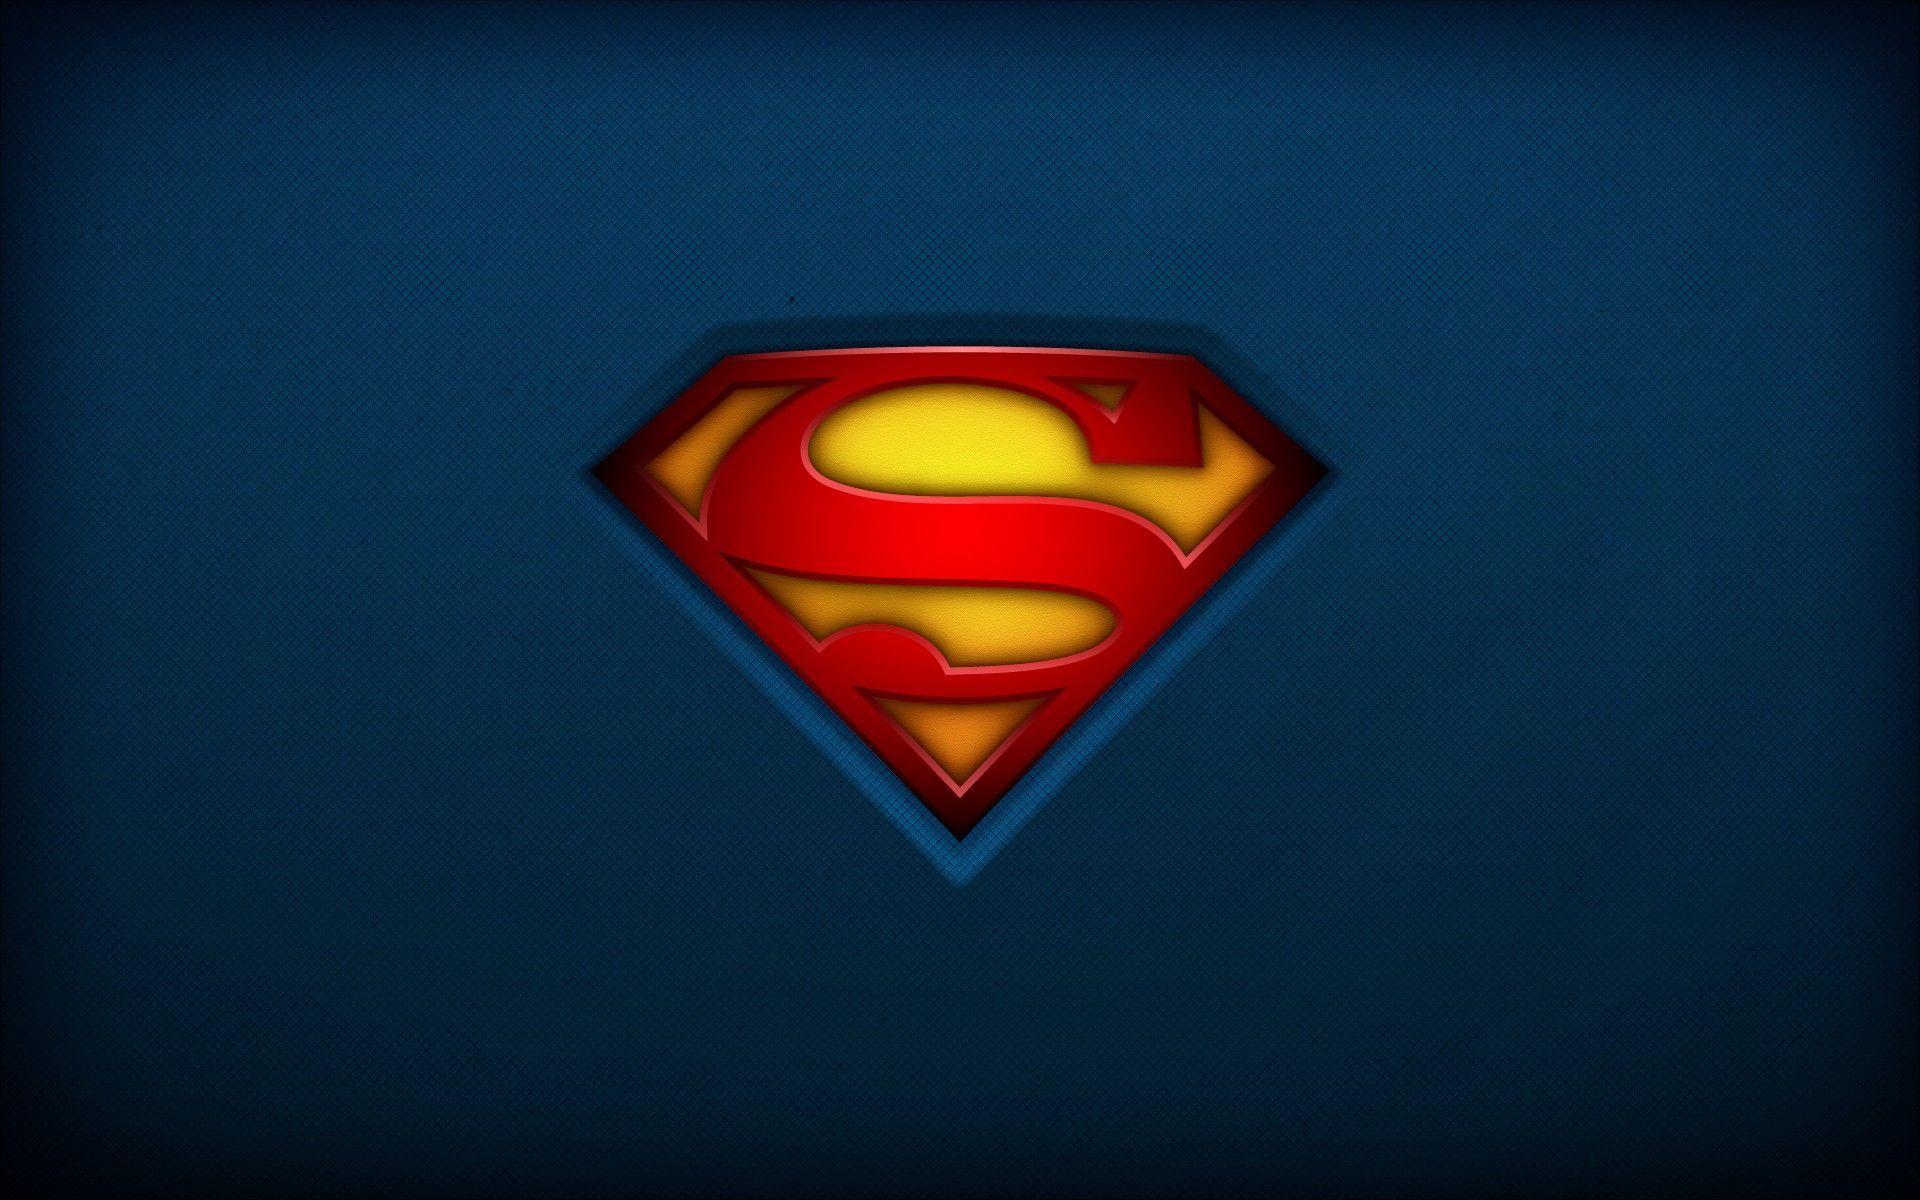 Superman Black Logo Wallpaper 06.10.2014 Top Wallpaper Best